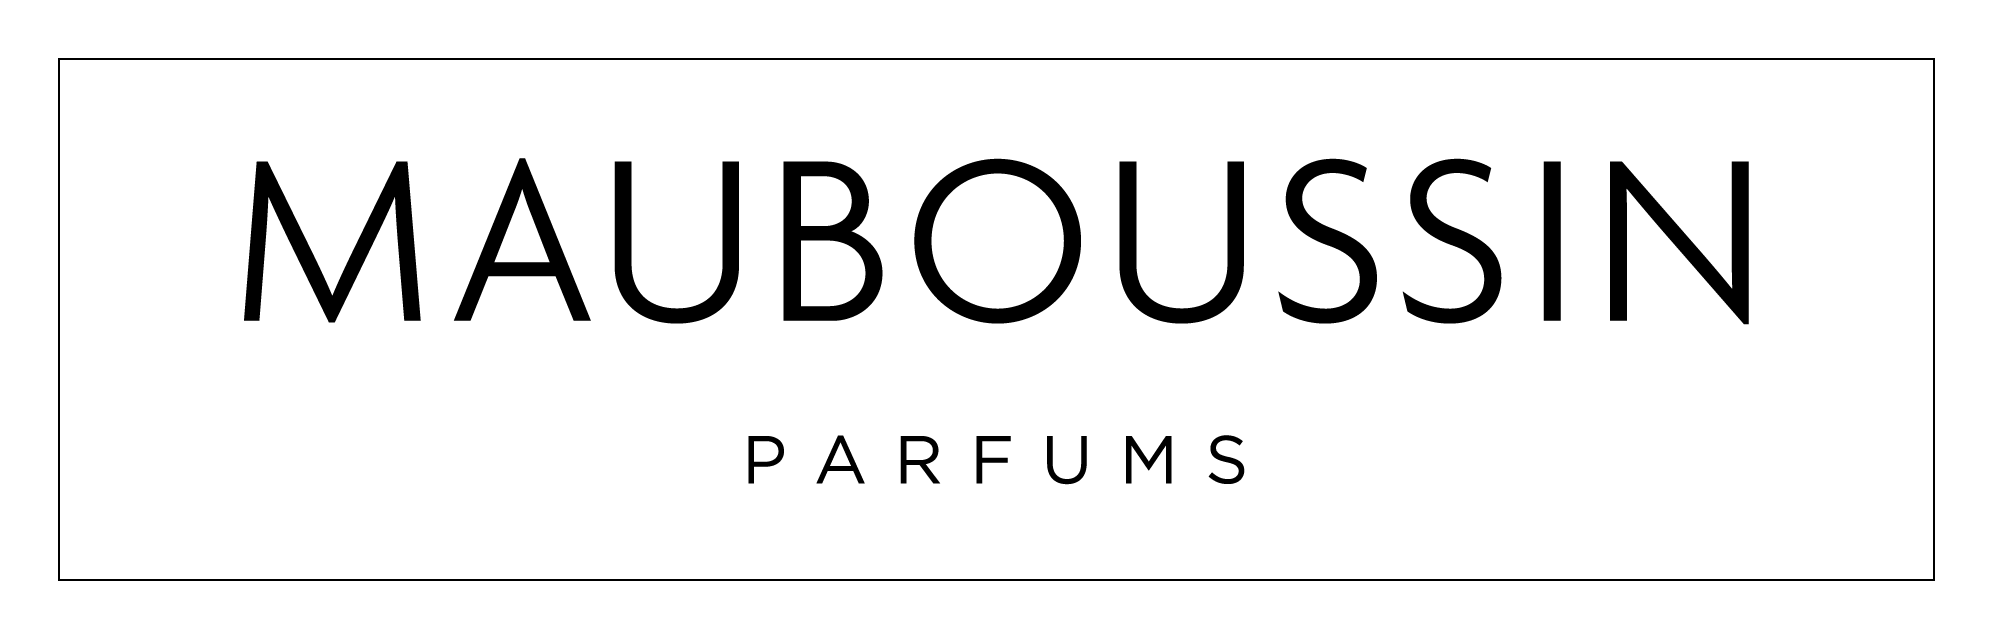 Mauboussin Logo - Mauboussin parfums